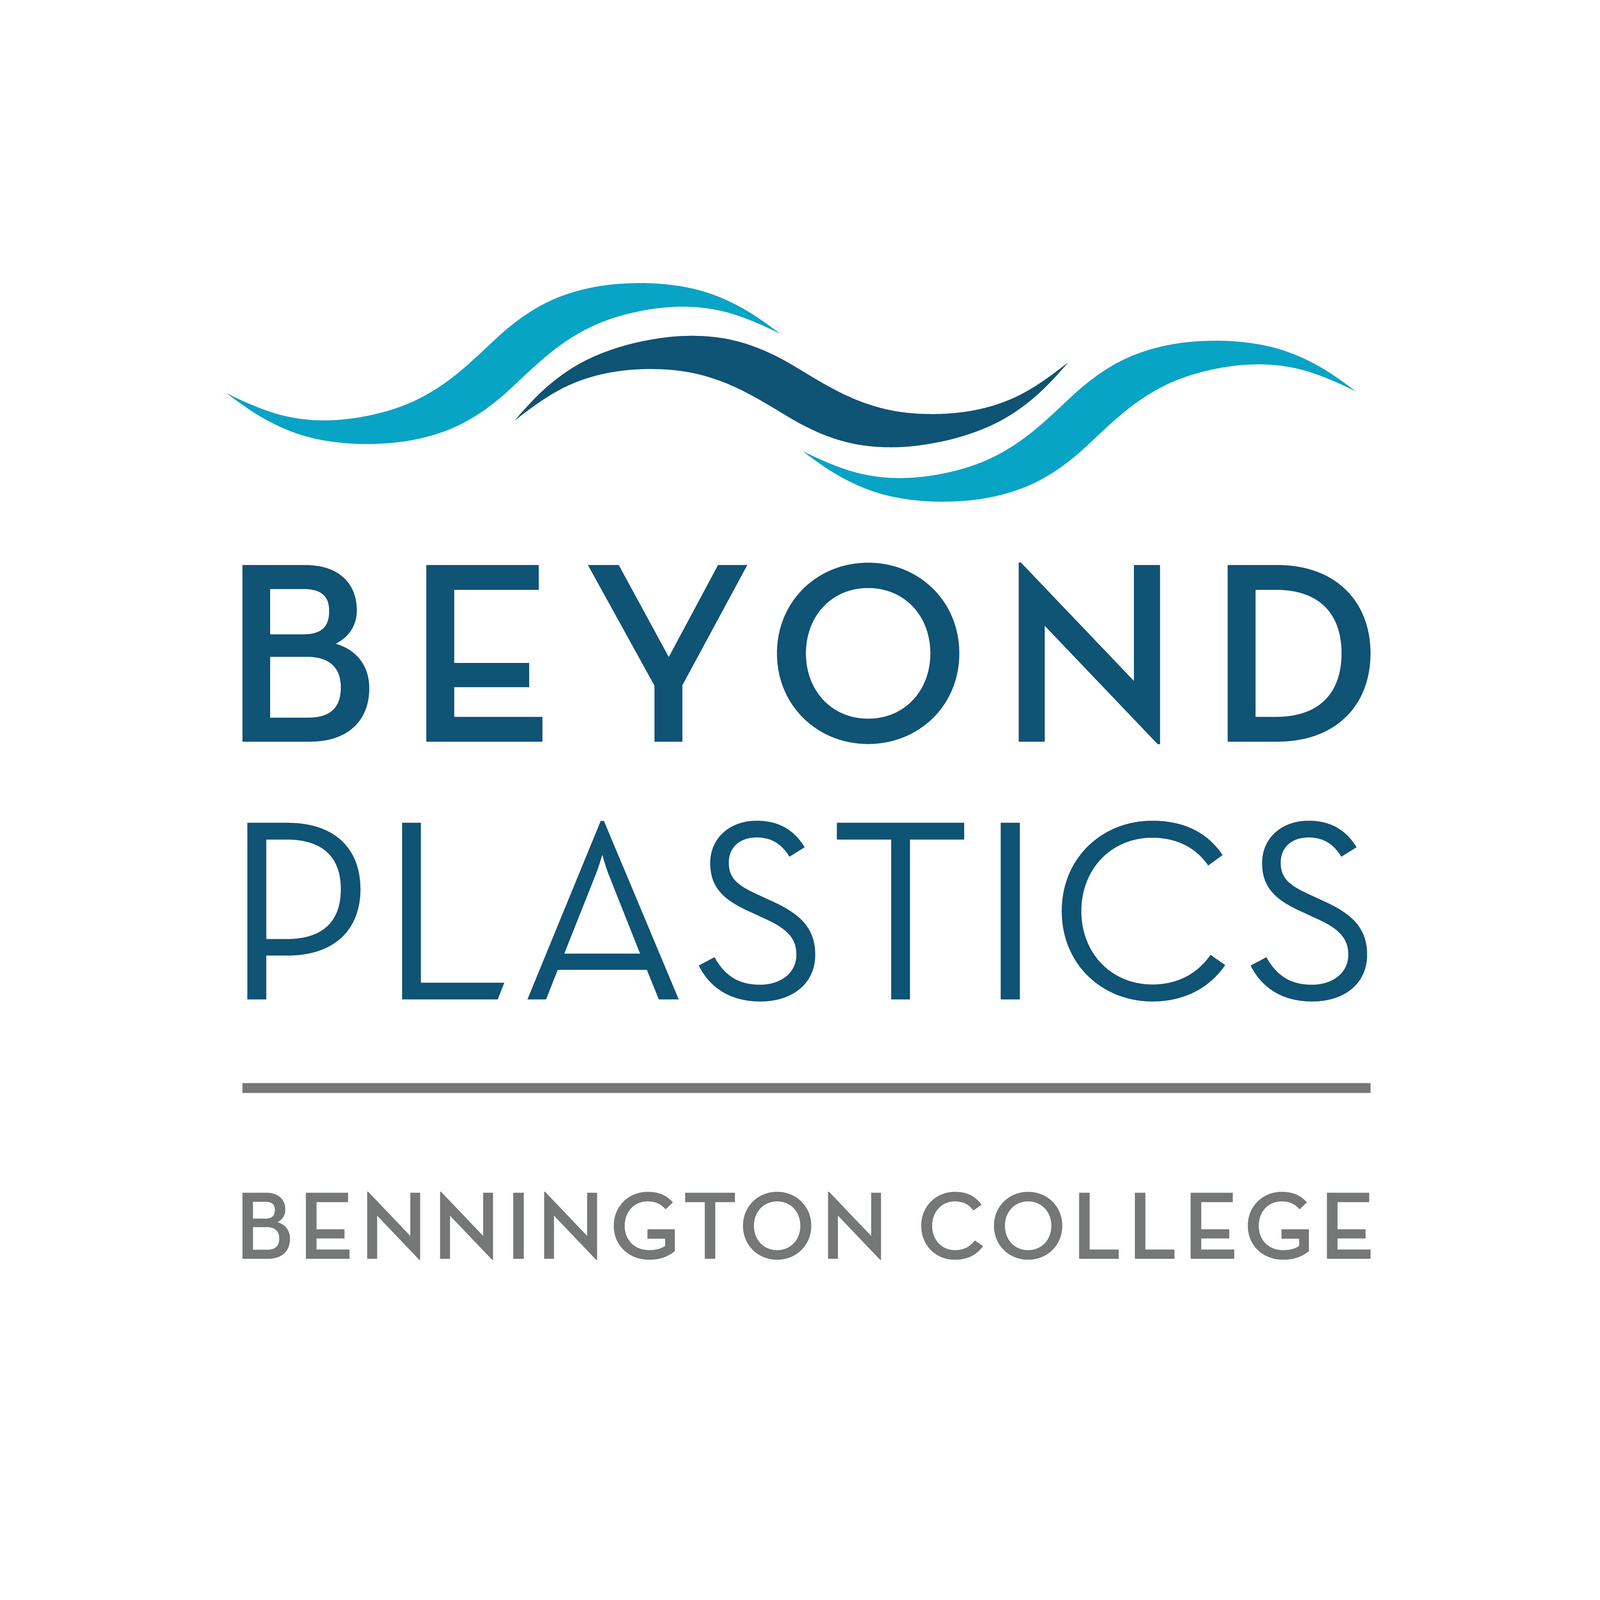 Beyond Plastics Names New Senior Advisor and Communications Director